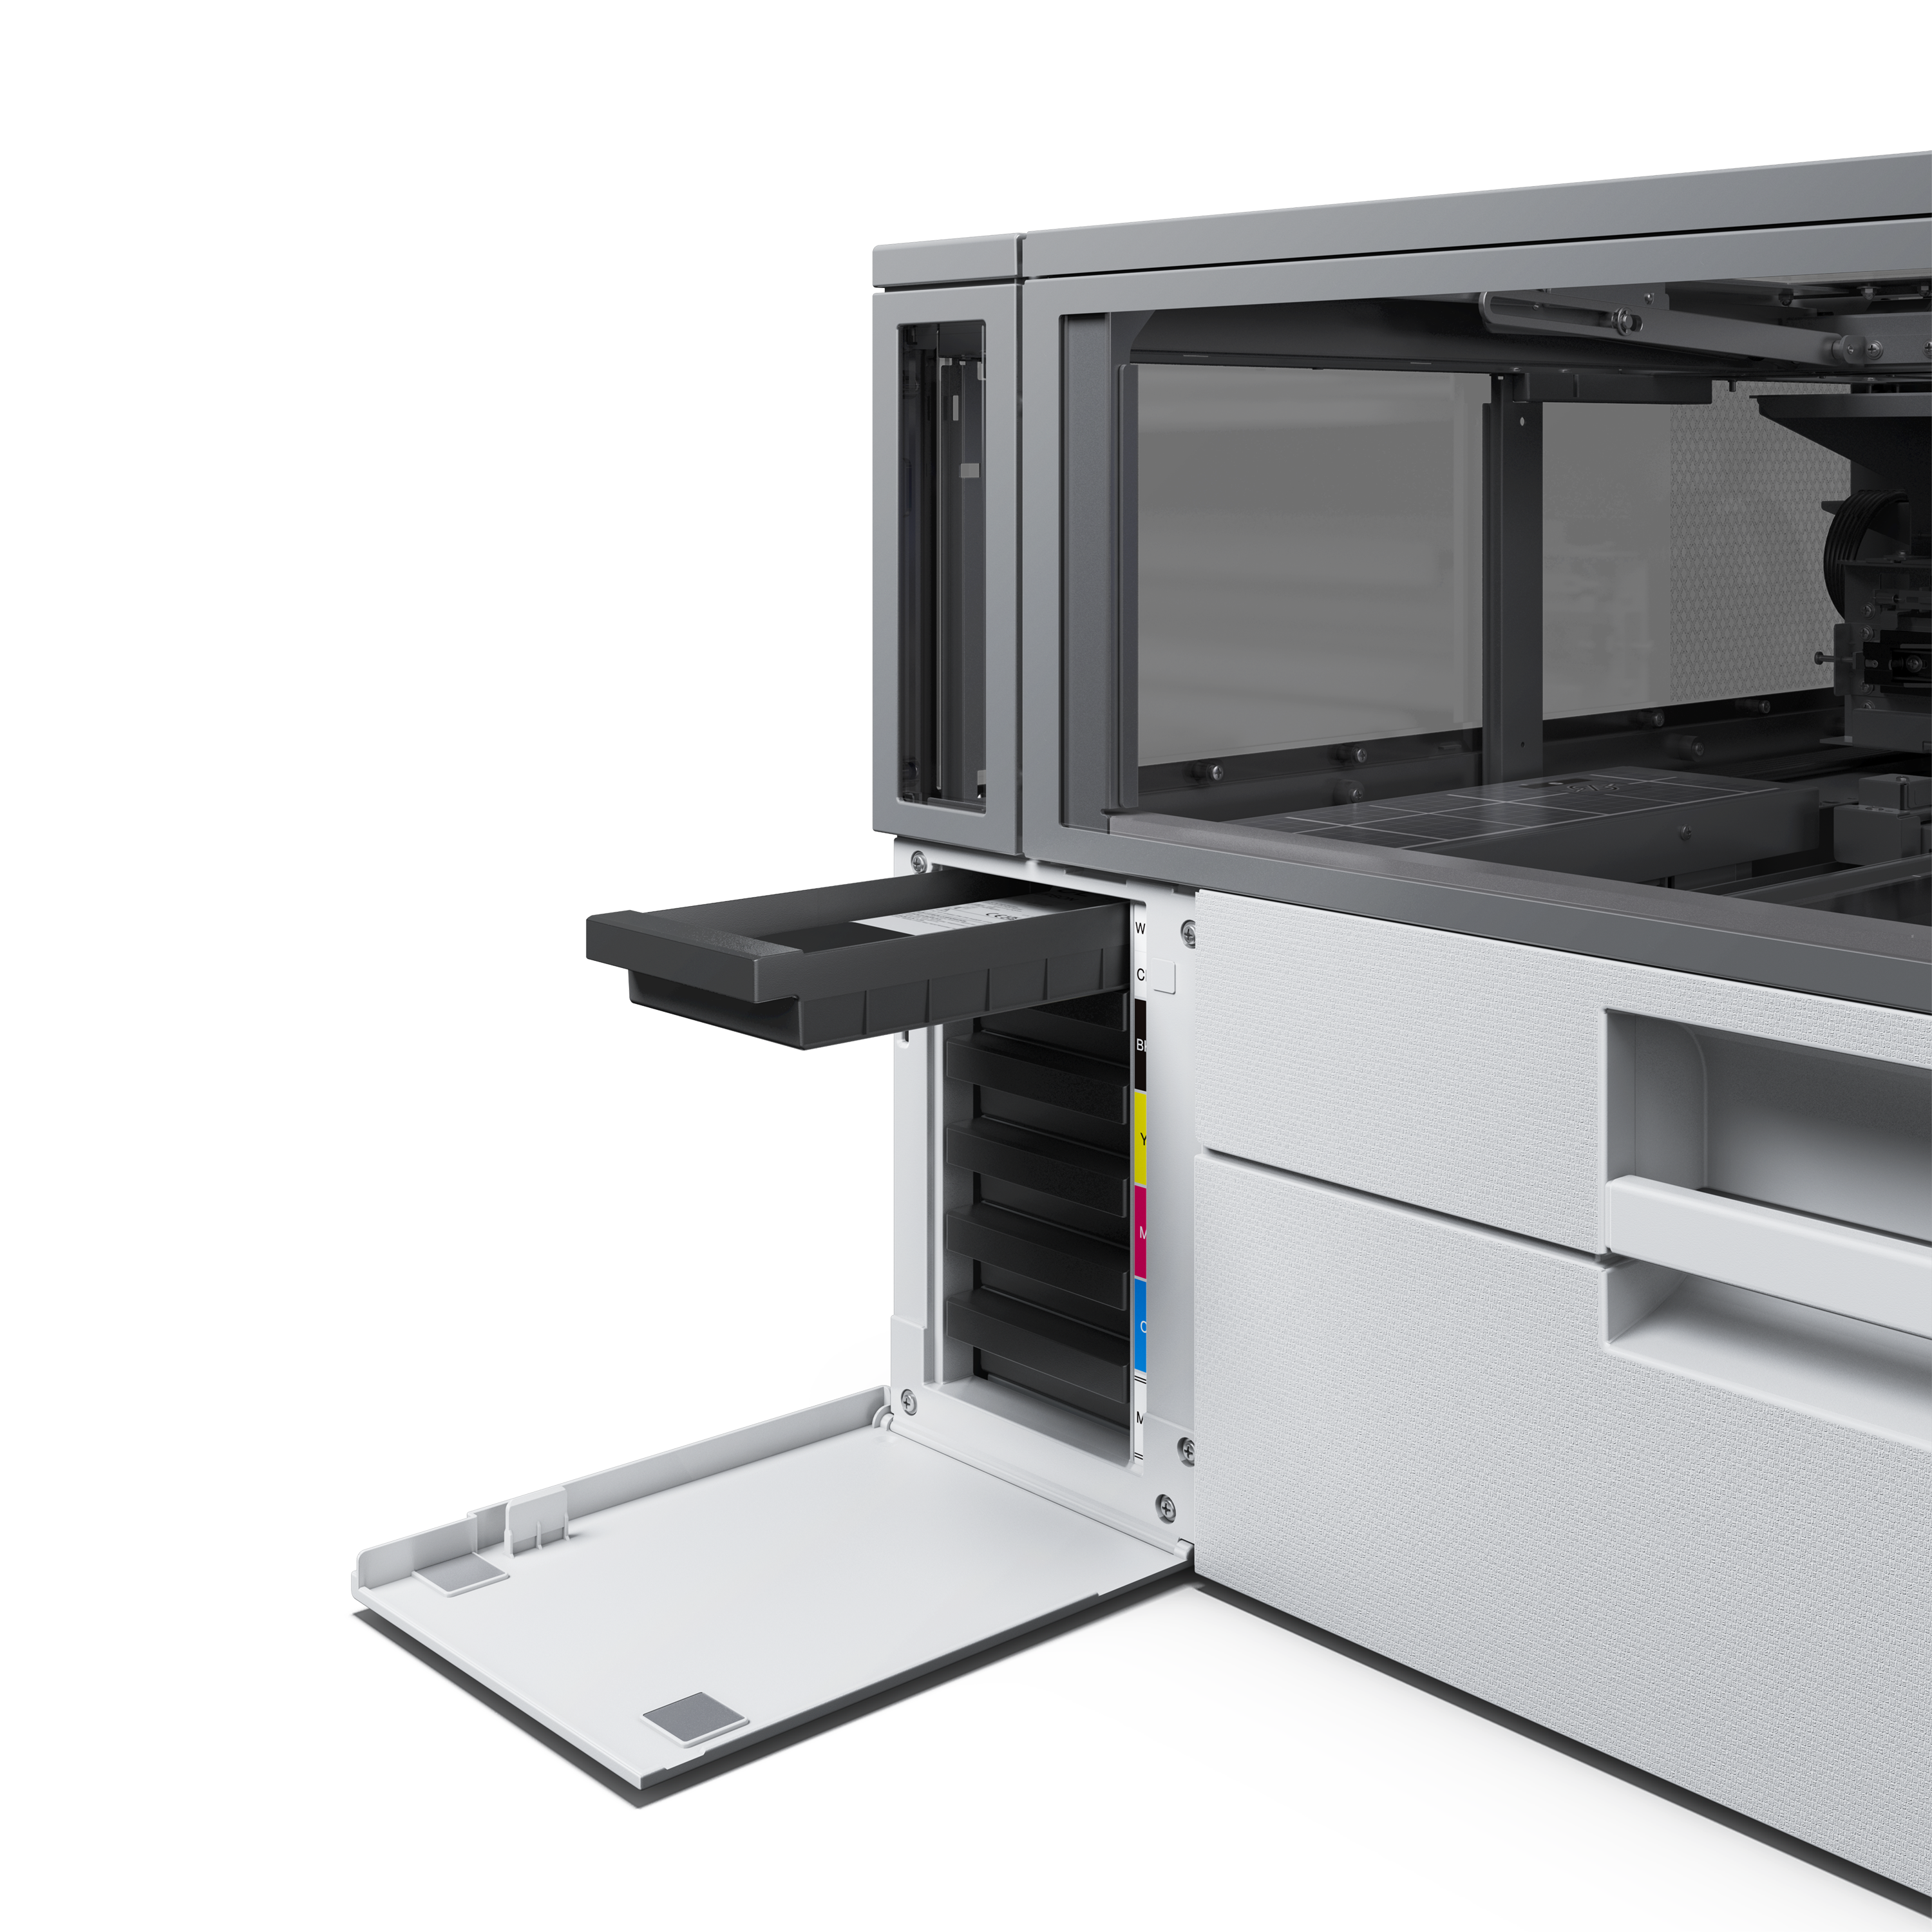 Epson® F1070 Hybrid Printer DTG / DTF - Joto Imaging Supplies Canada